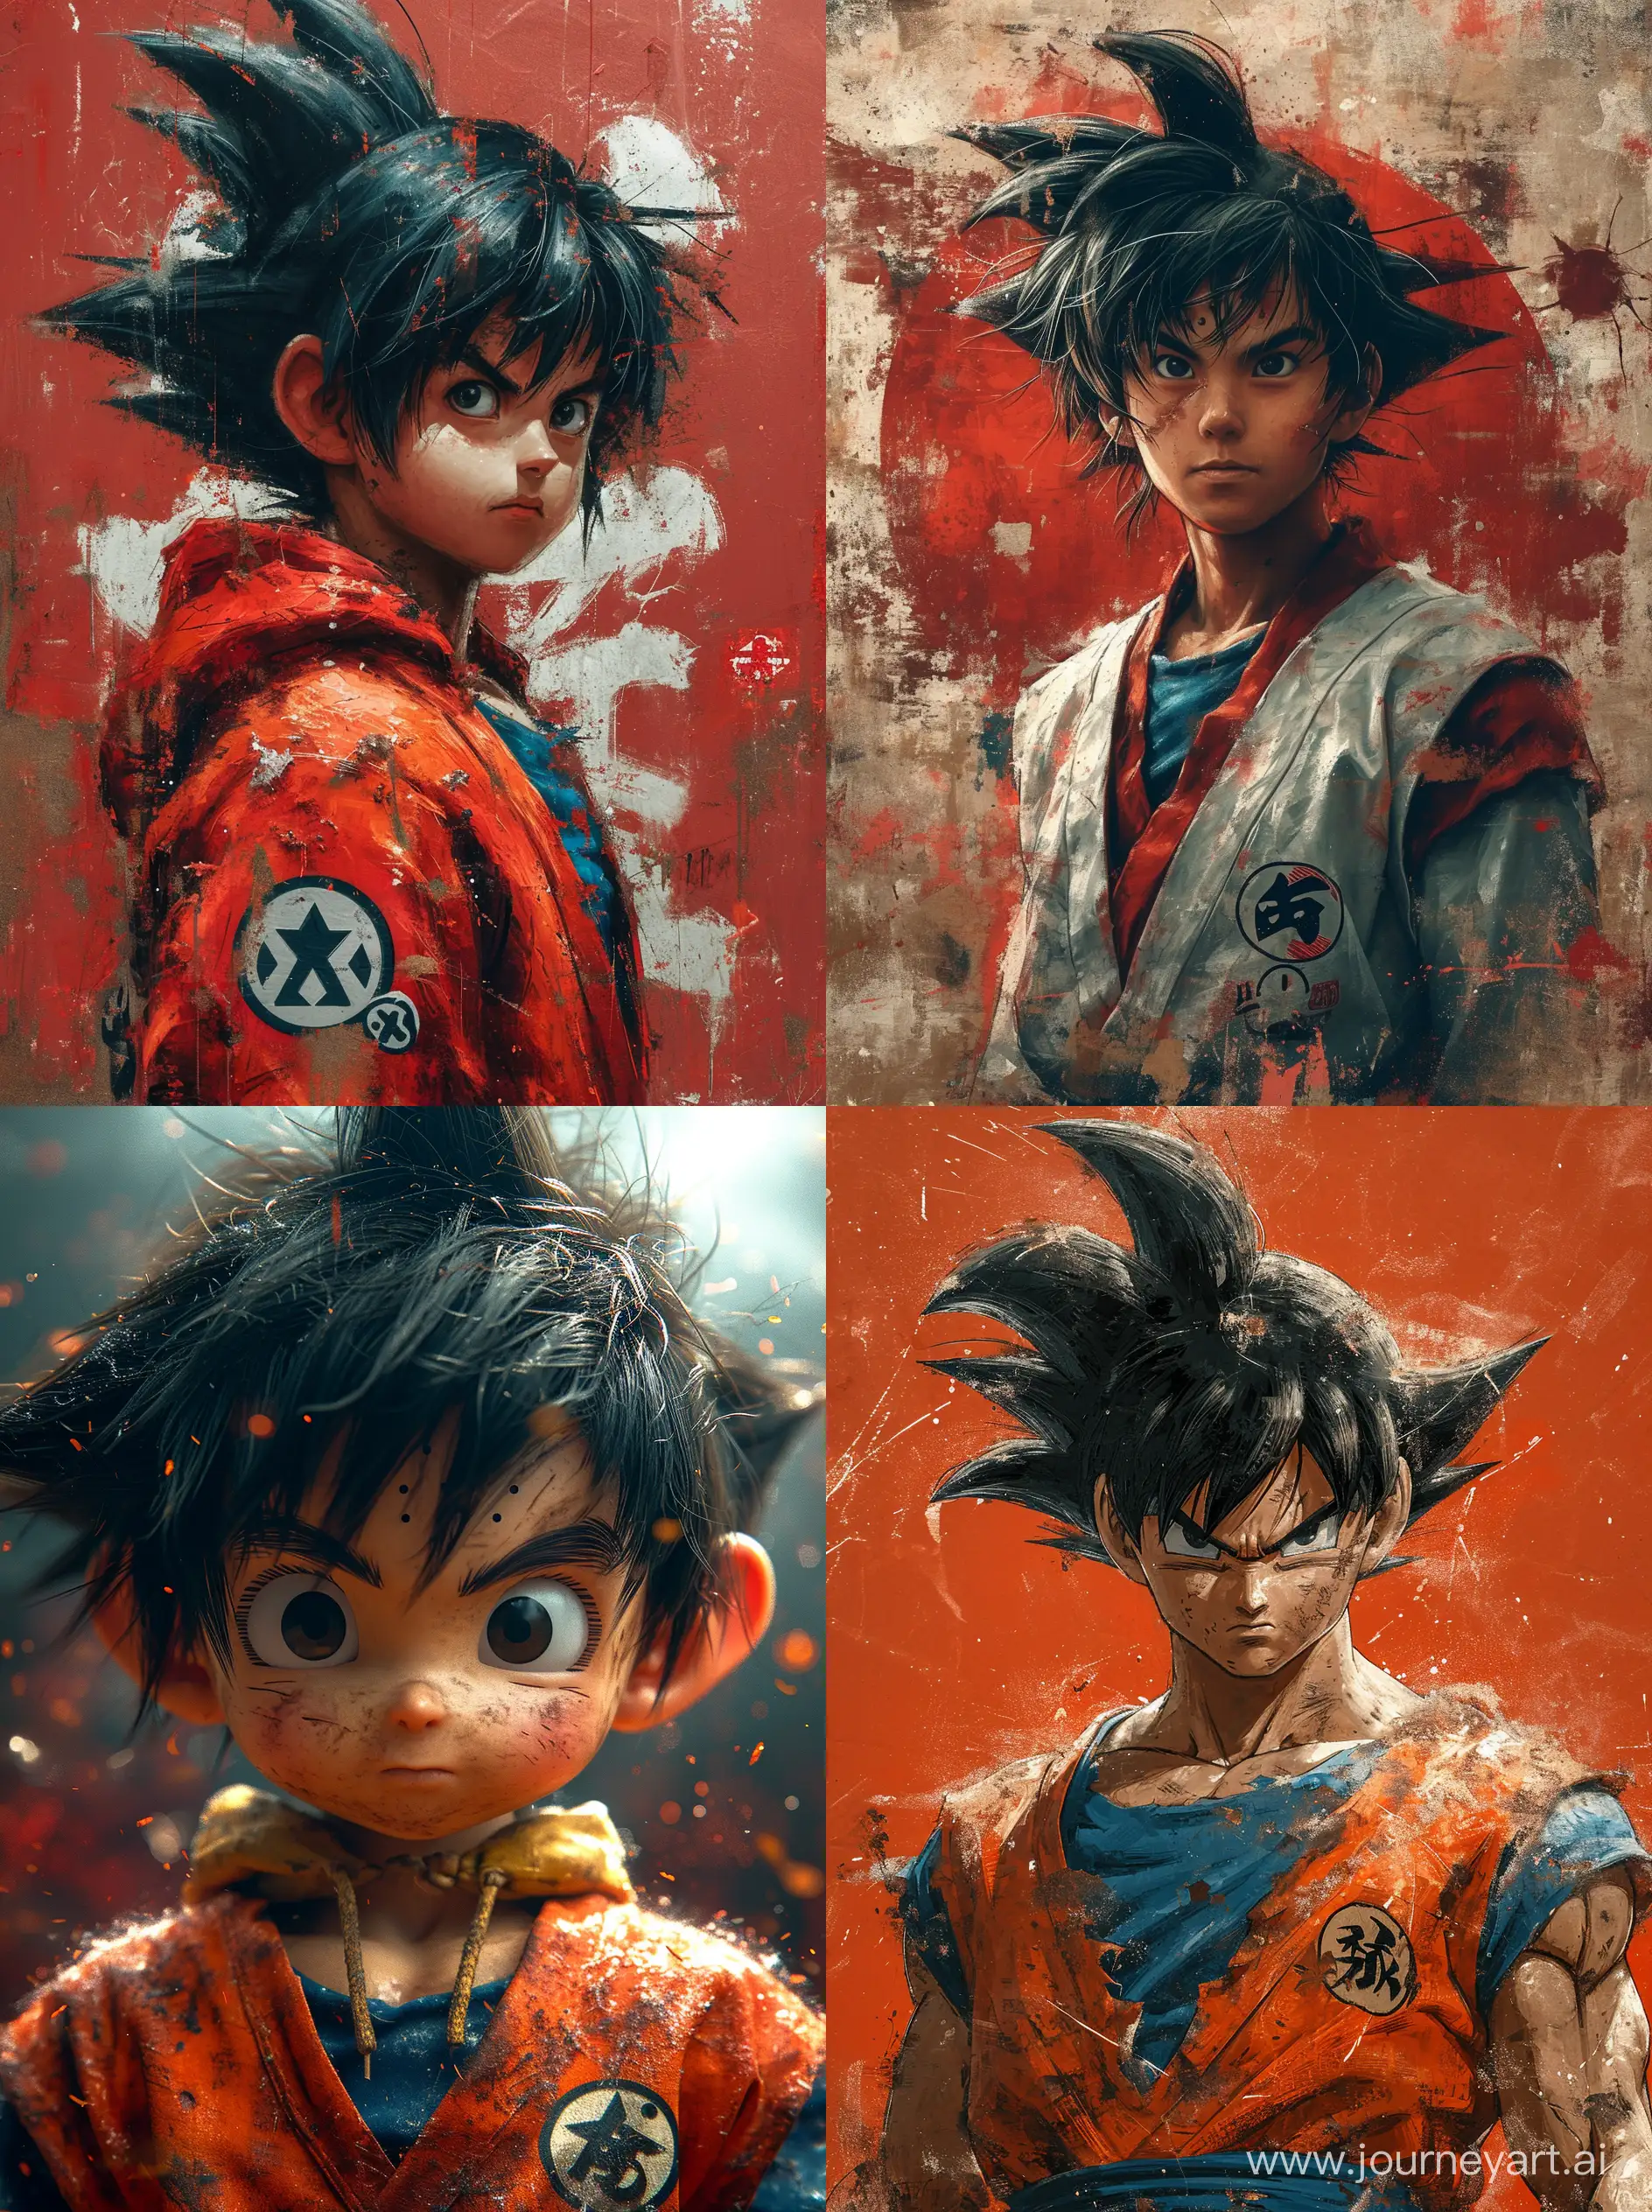 Dr-Goku-Street-Art-Portrait-with-Anime-Aesthetic